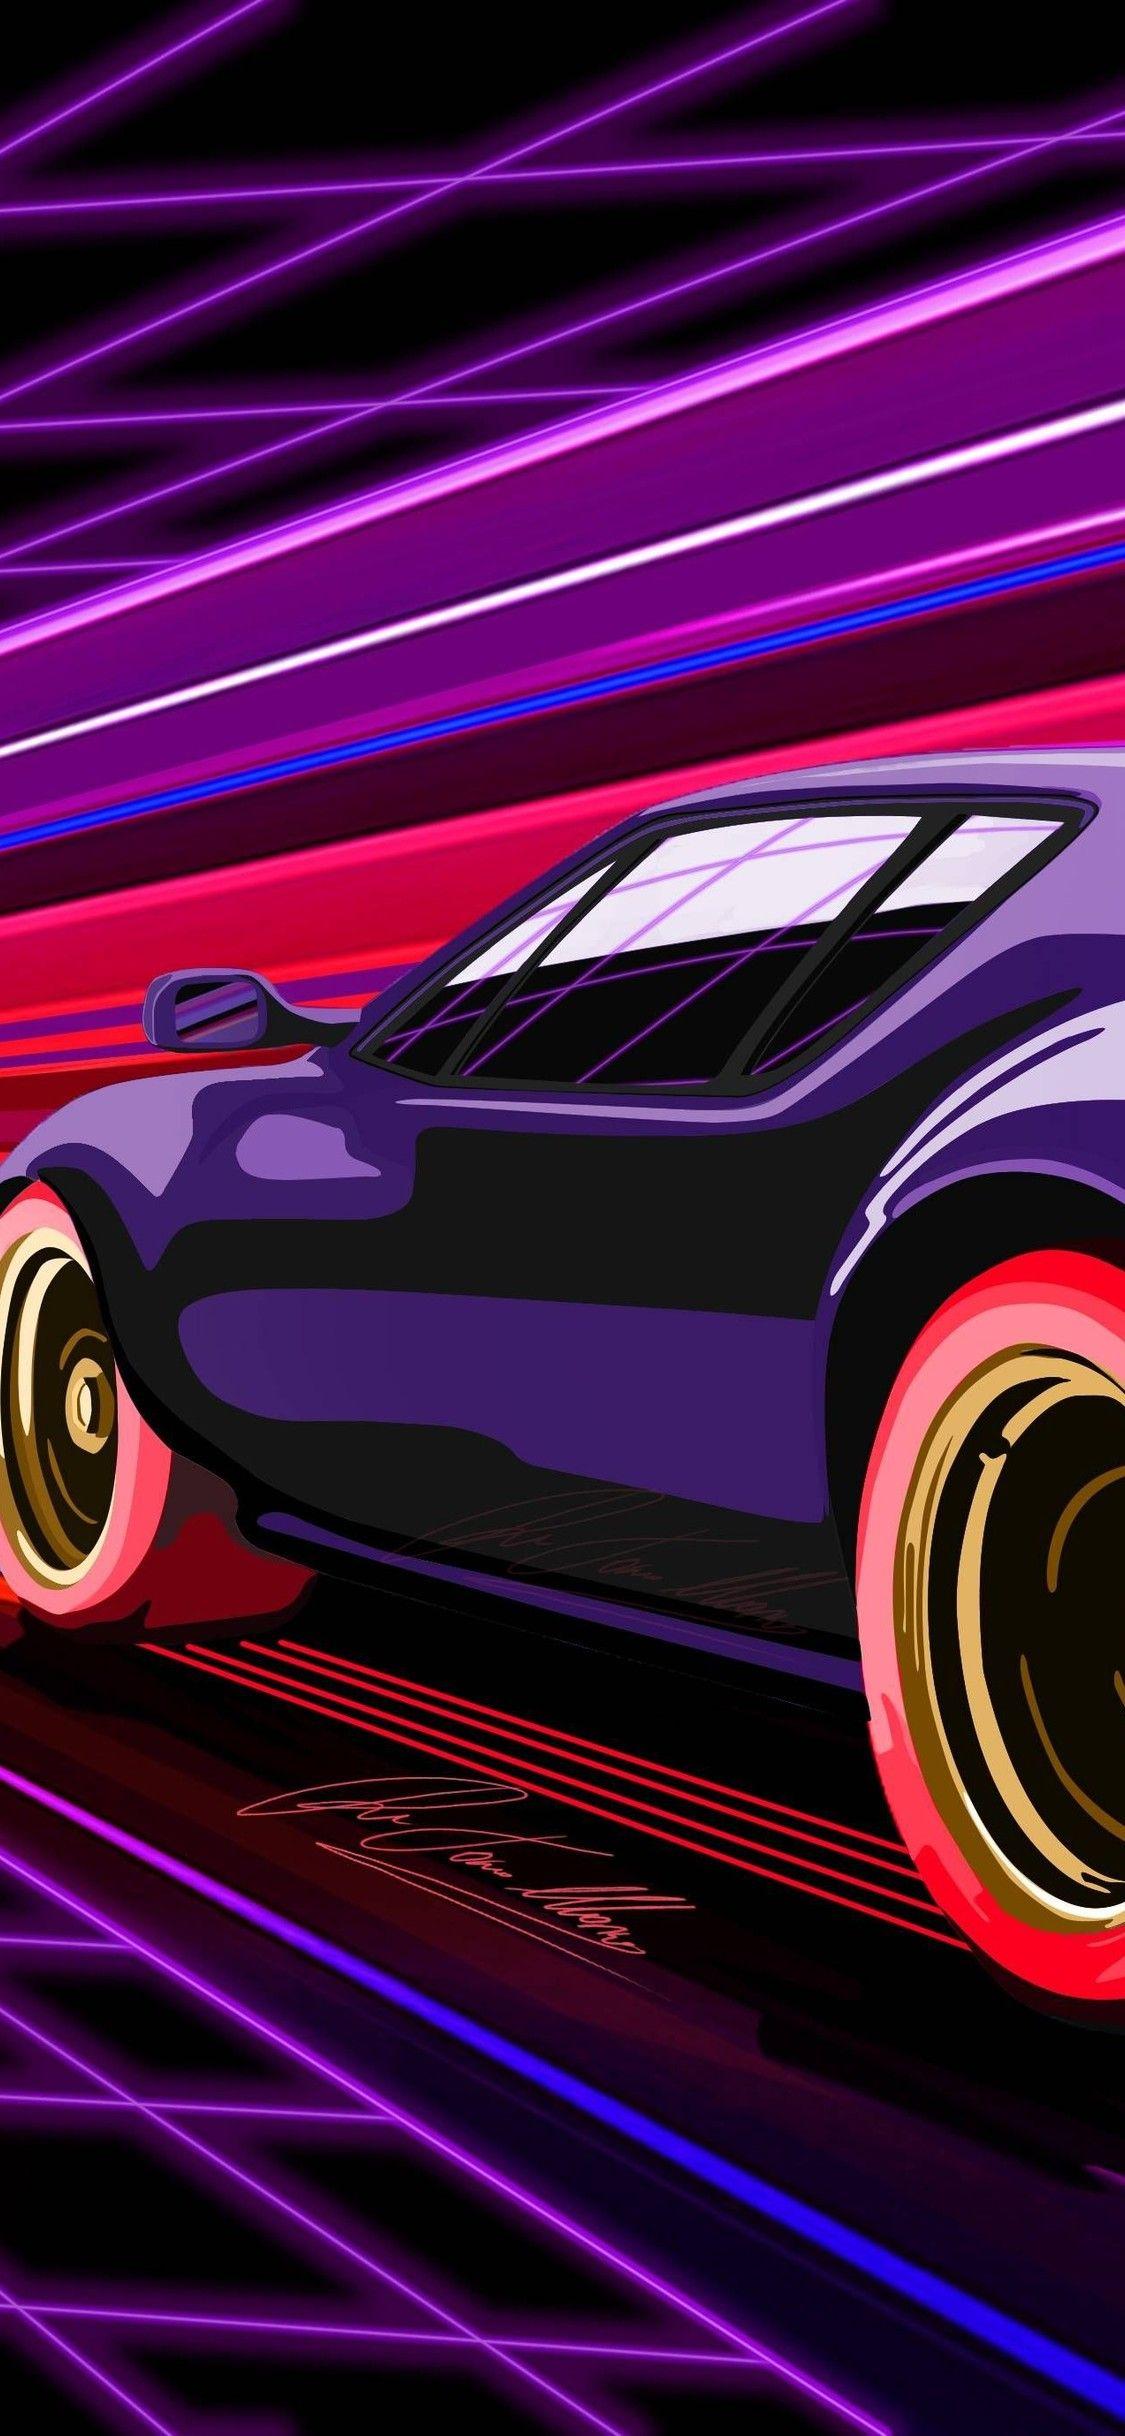 Retro Racing Muscle Car iPhone X. Cool wallpaper